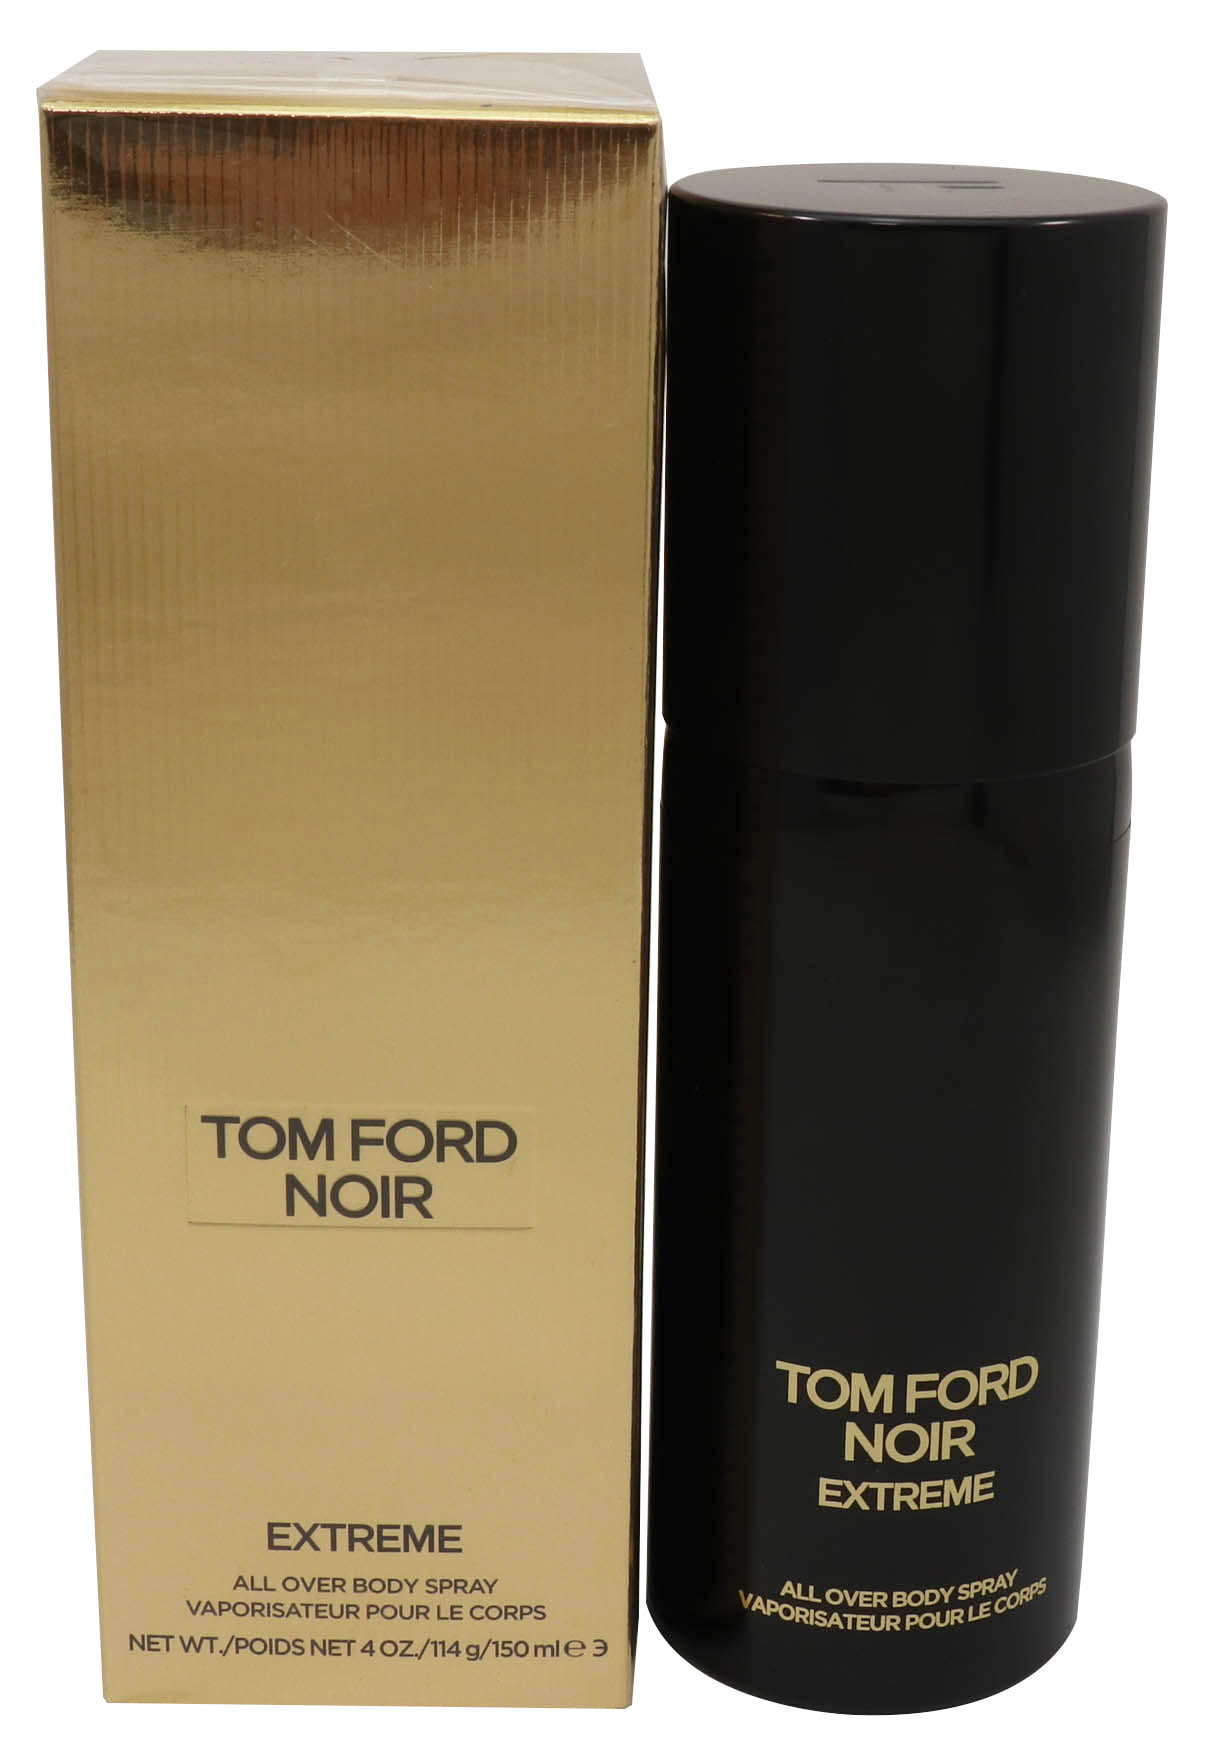 Tom Ford Noir Extreme All Over Body Spray 4.0 oz/ 150 ml